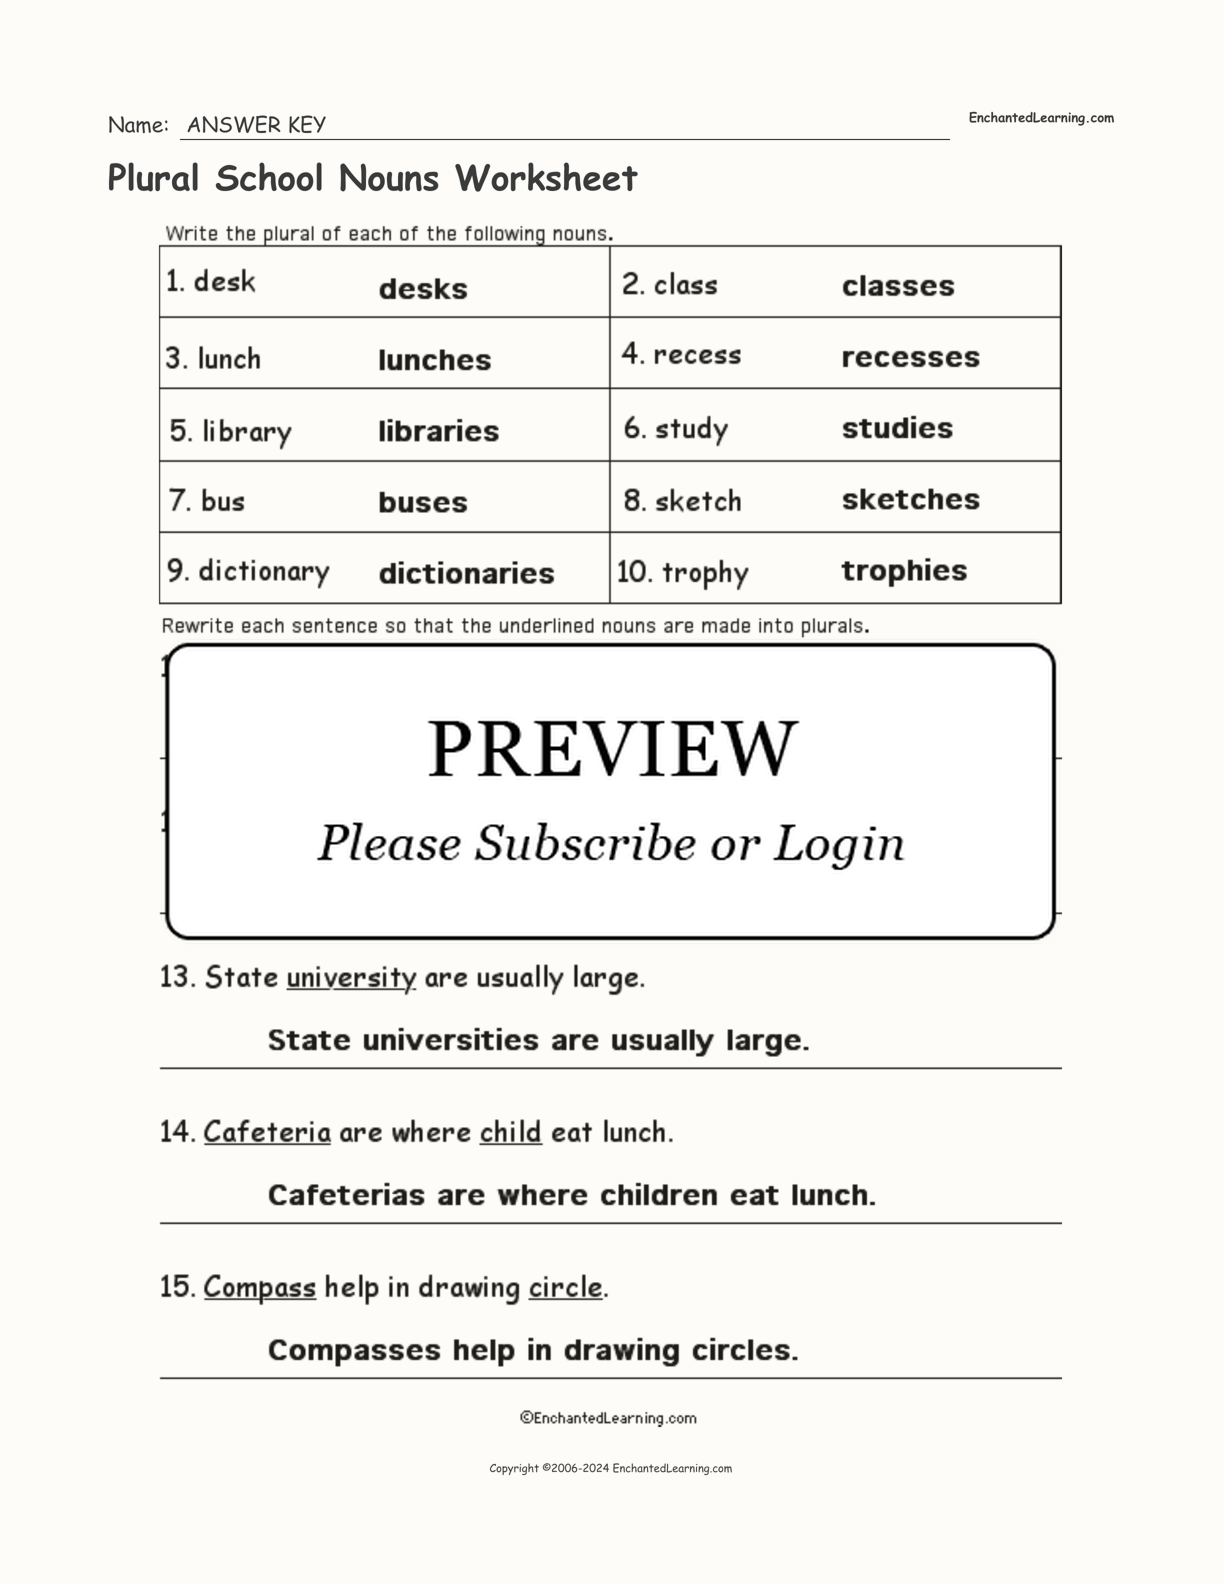 Plural School Nouns Worksheet interactive worksheet page 2